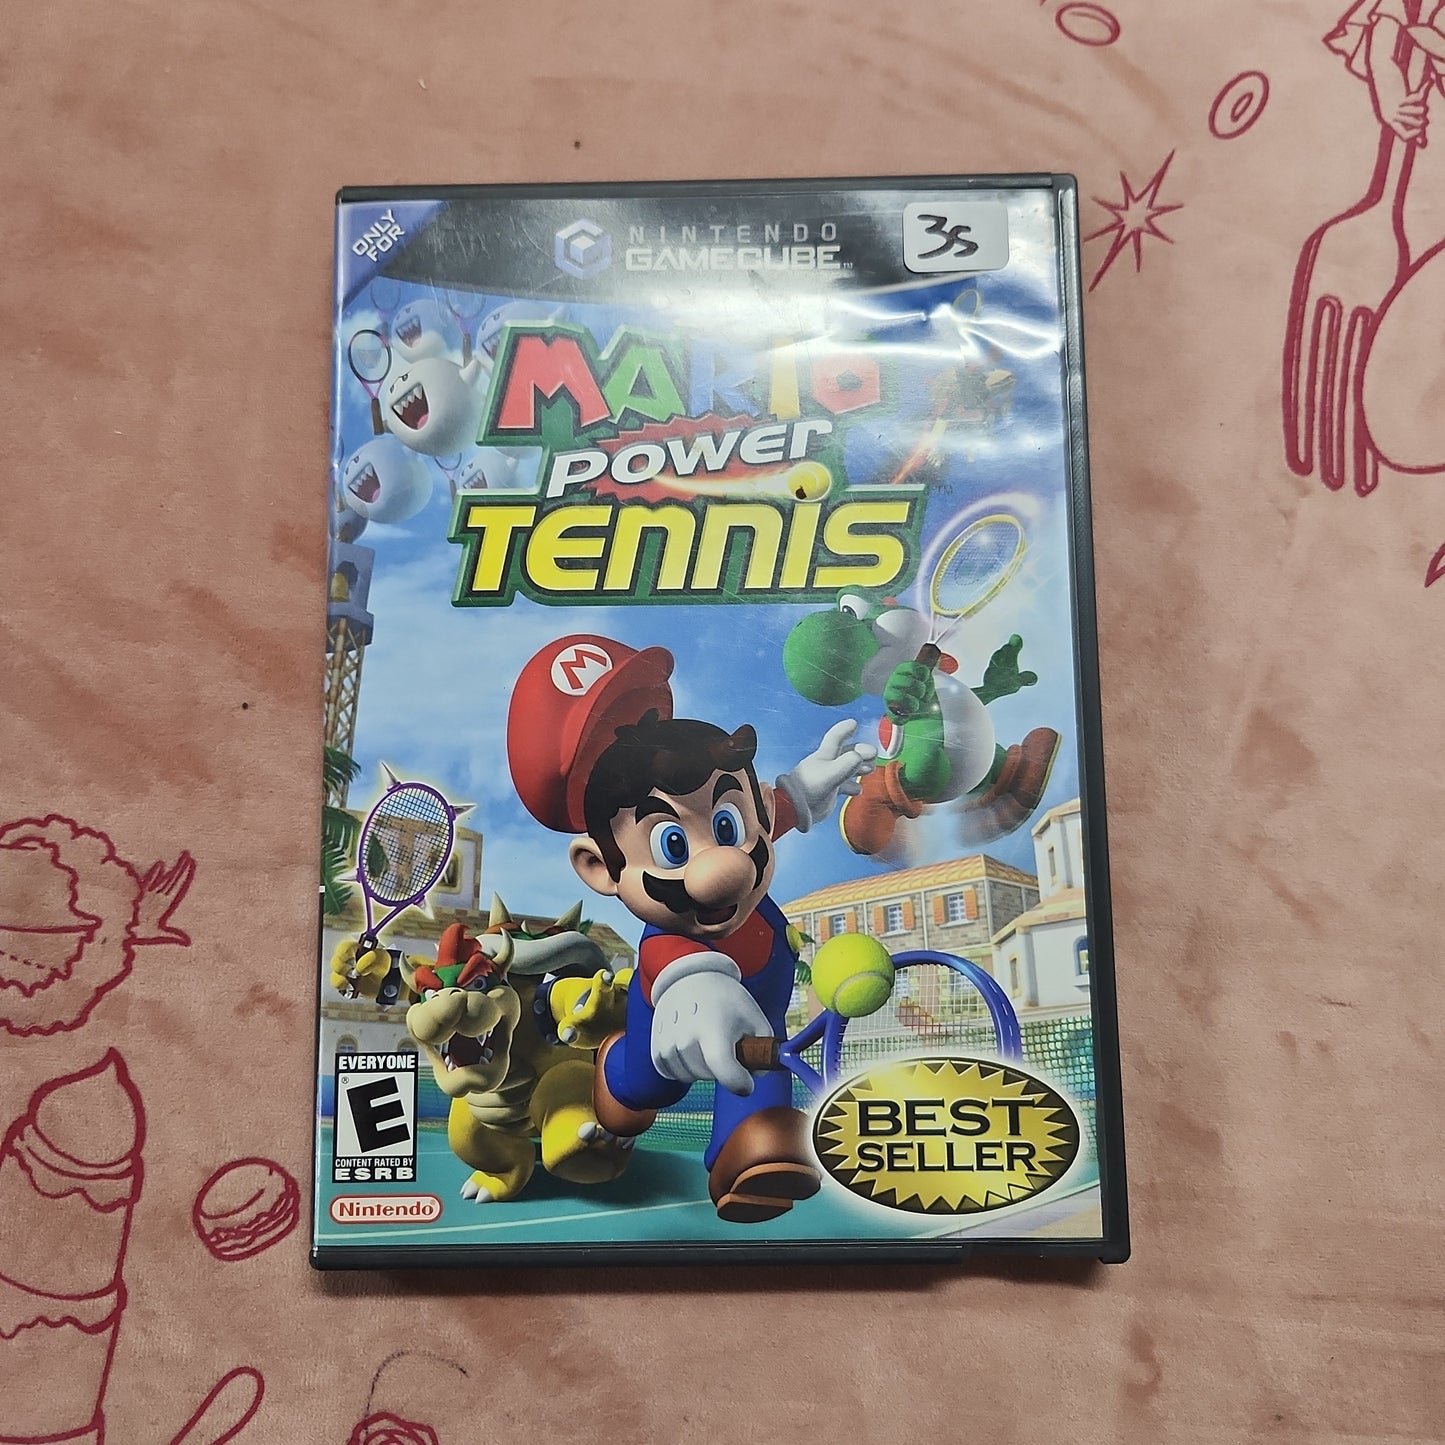 Mario Power Tennis - Nintendo Gamecube (Complete)